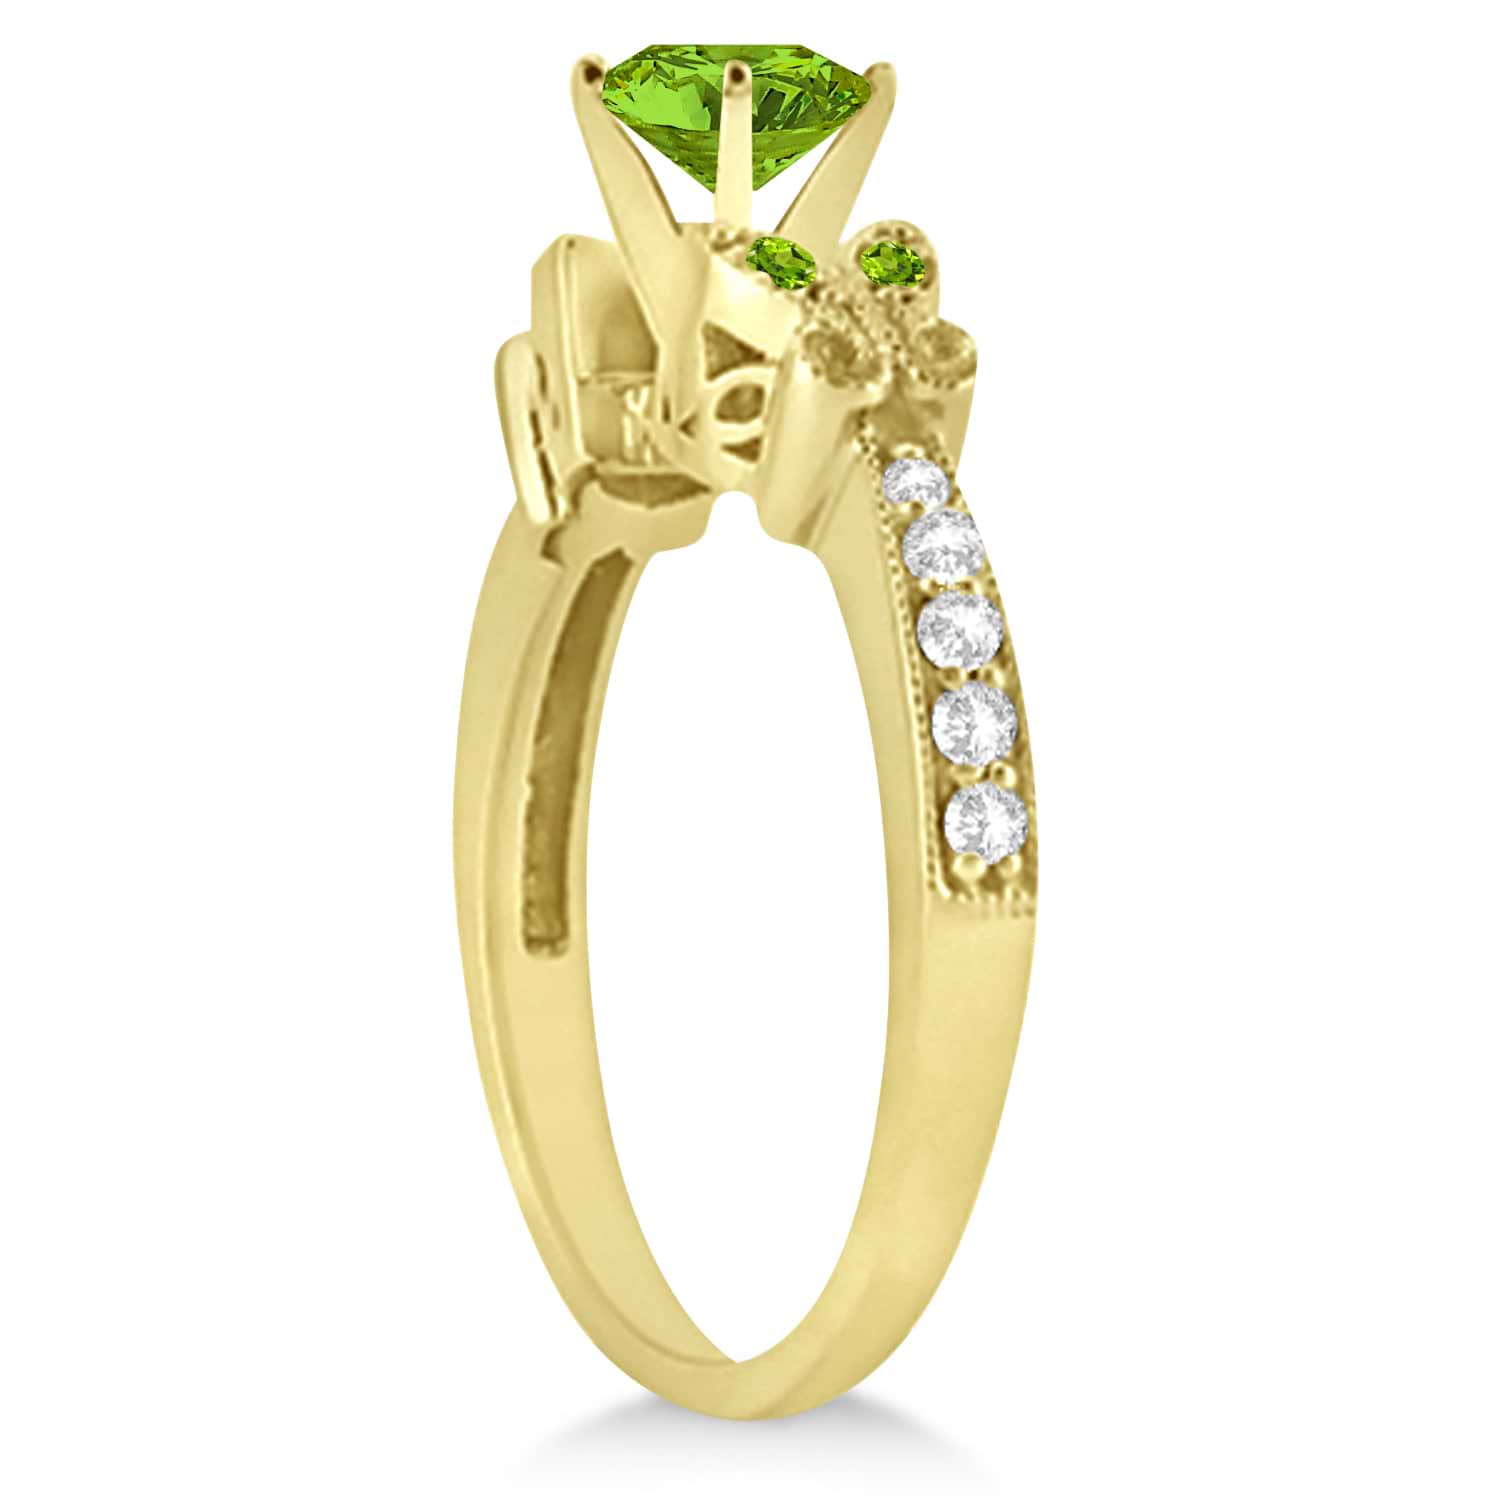 Butterfly Genuine Peridot & Diamond Engagement Ring 14K Yellow Gold 1.11ct